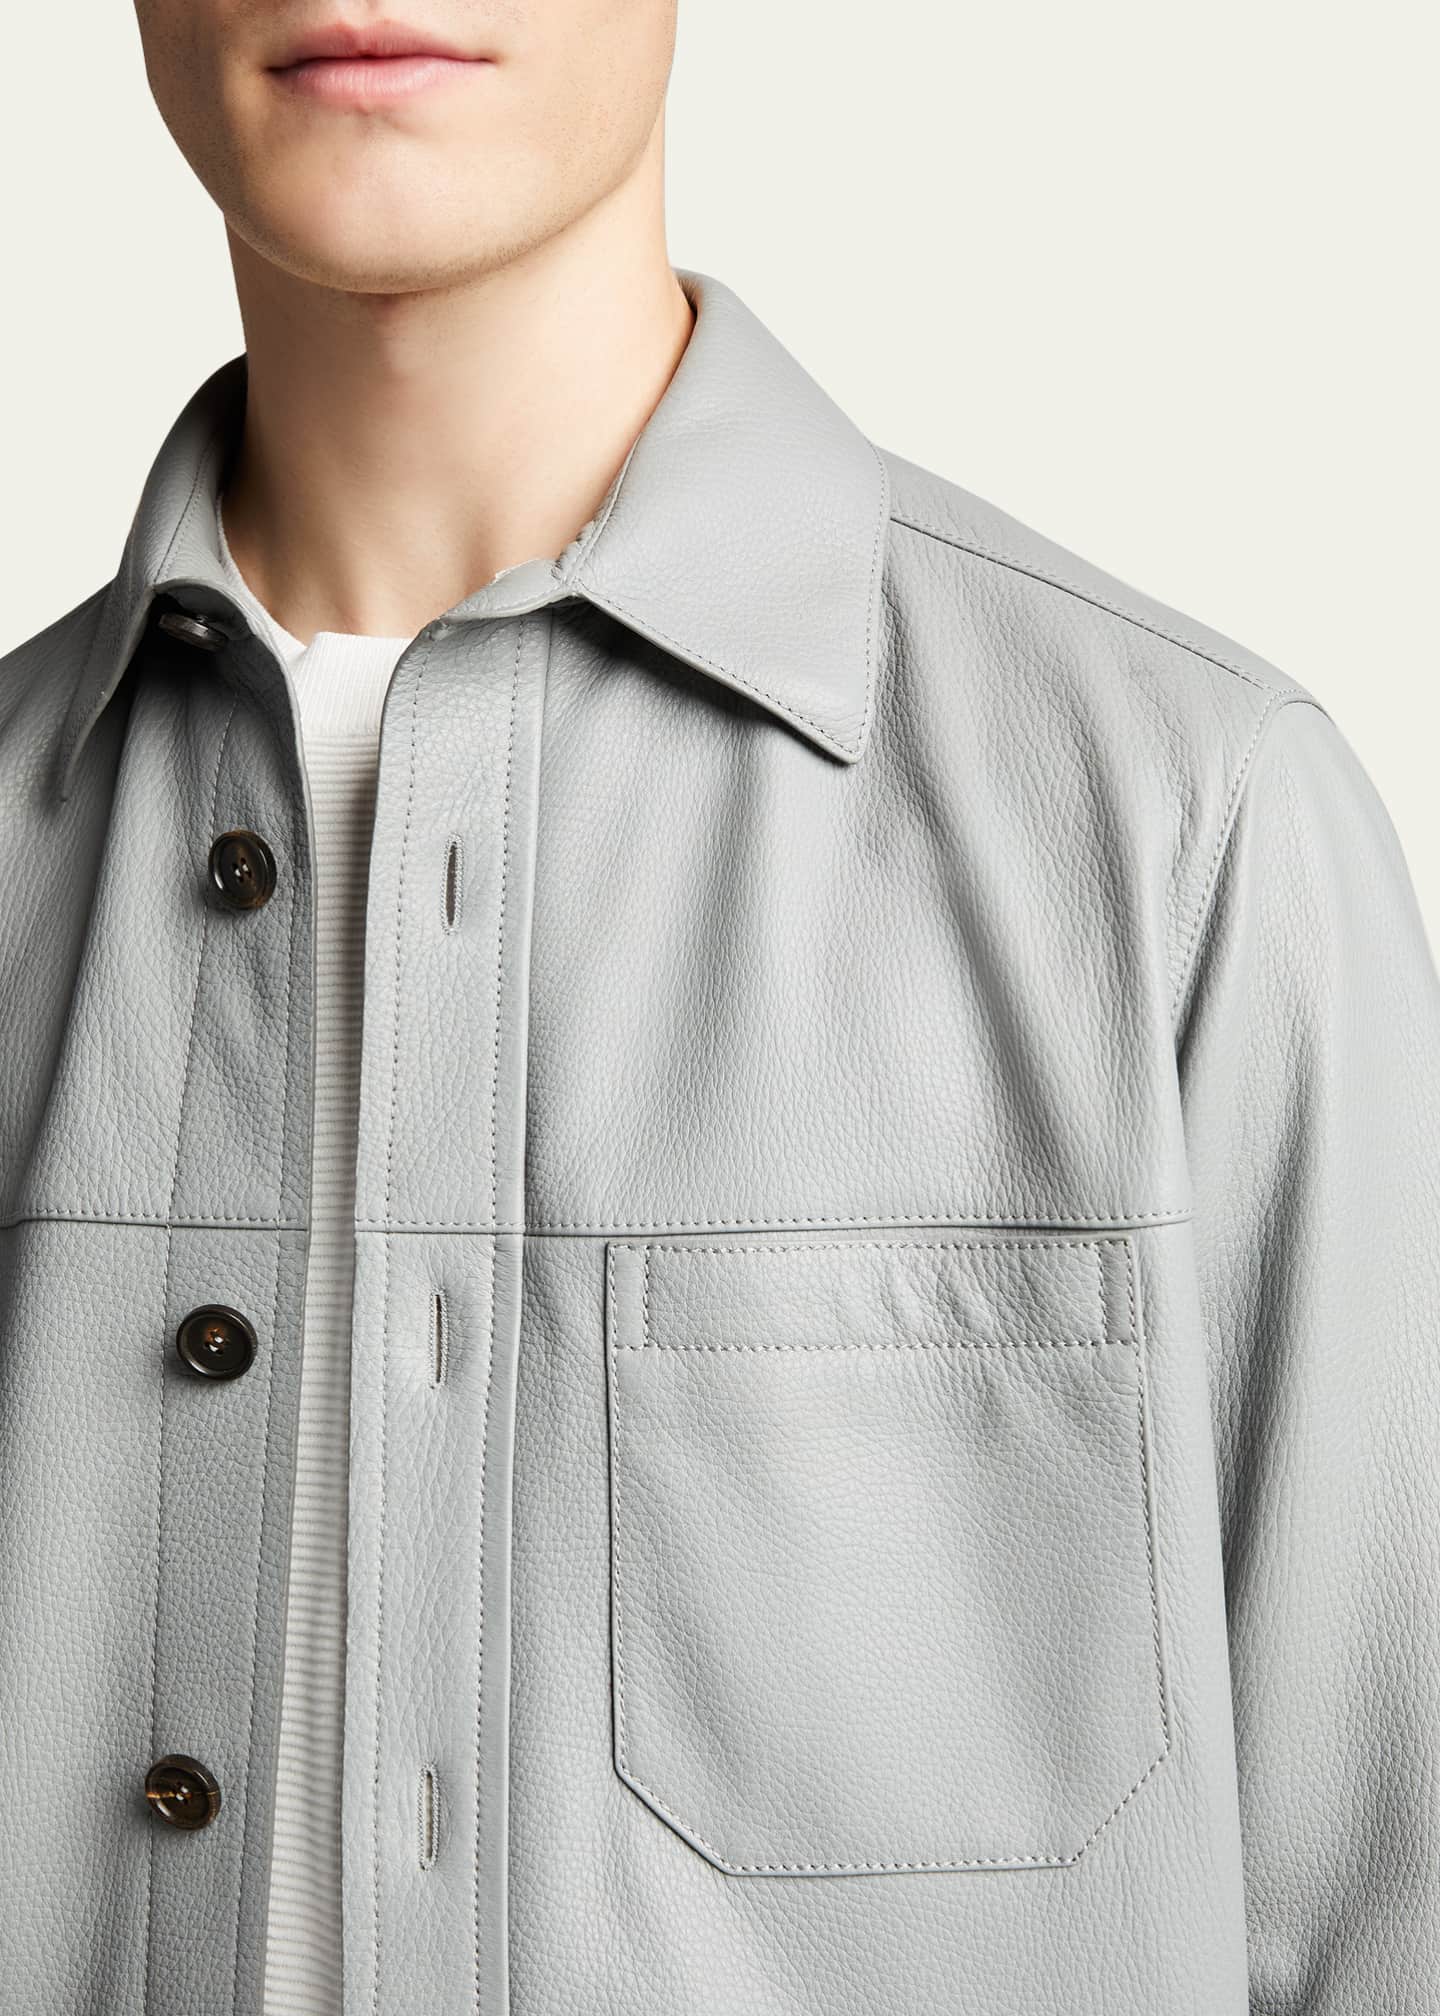 Luxury GUCCI Black Solid Men's Dress Shirt US 15 3/4 EU40 Buttons up Long  Sleeve